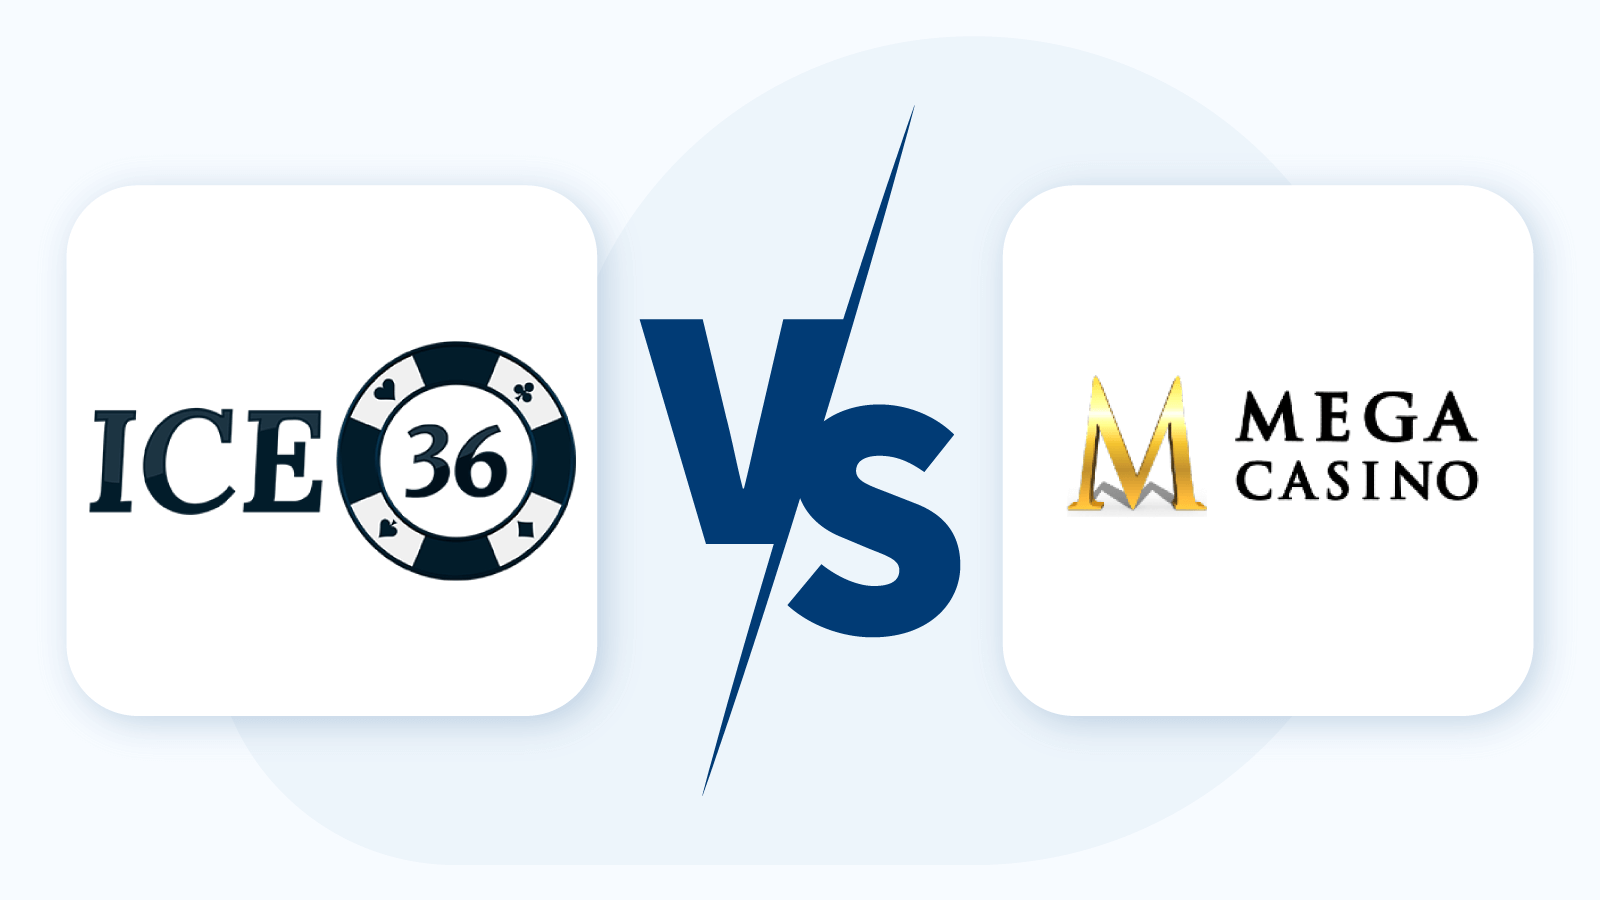 Comparativa entre ICE36 y Mega Casino